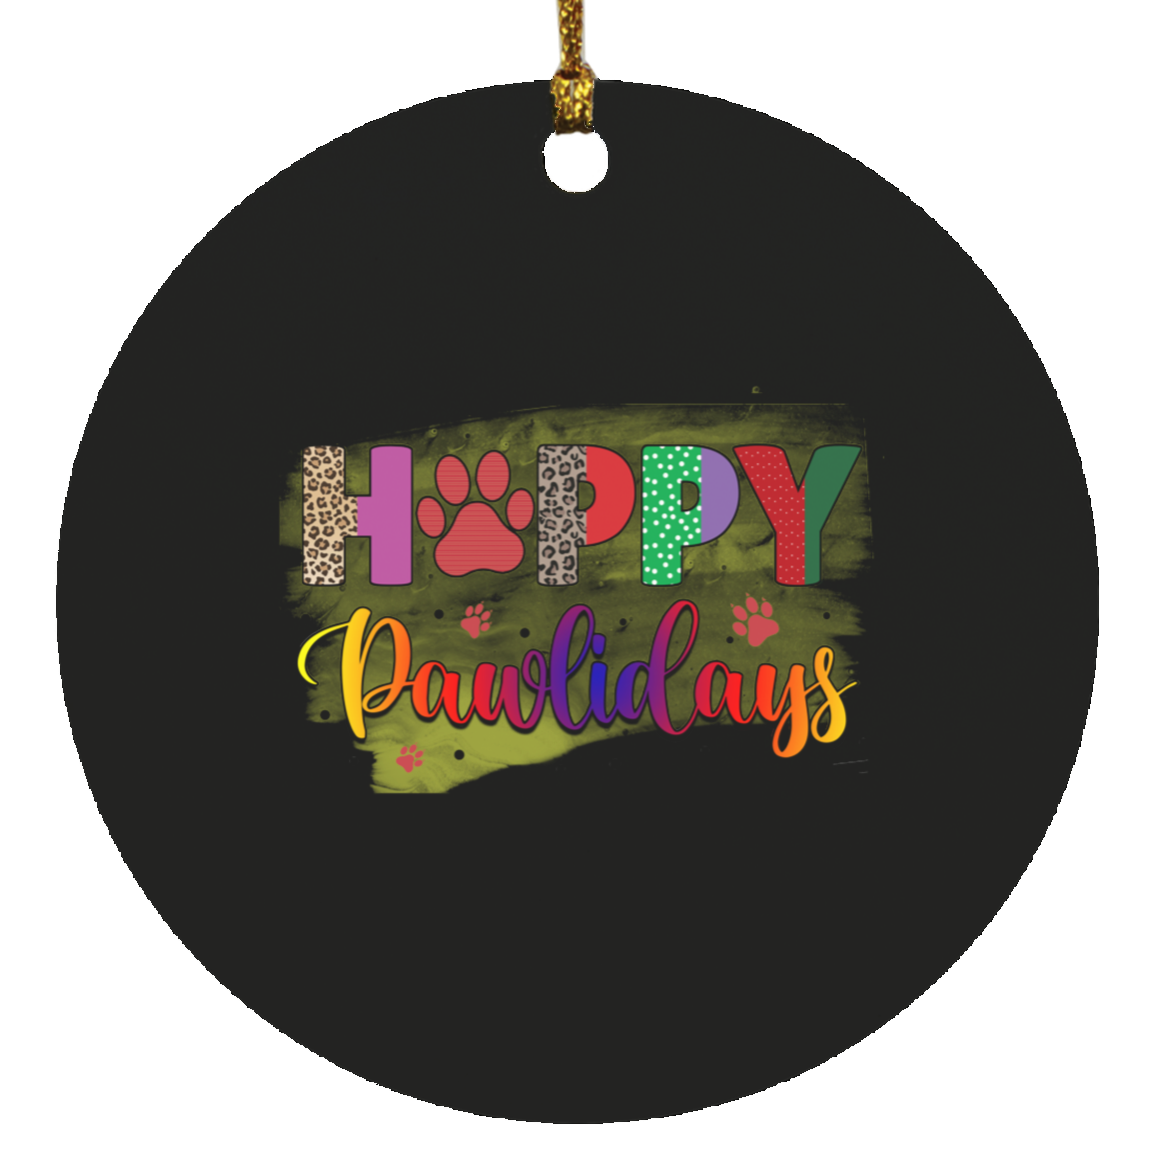 Happy Pawlidays Christmas Dog Circle Ornament